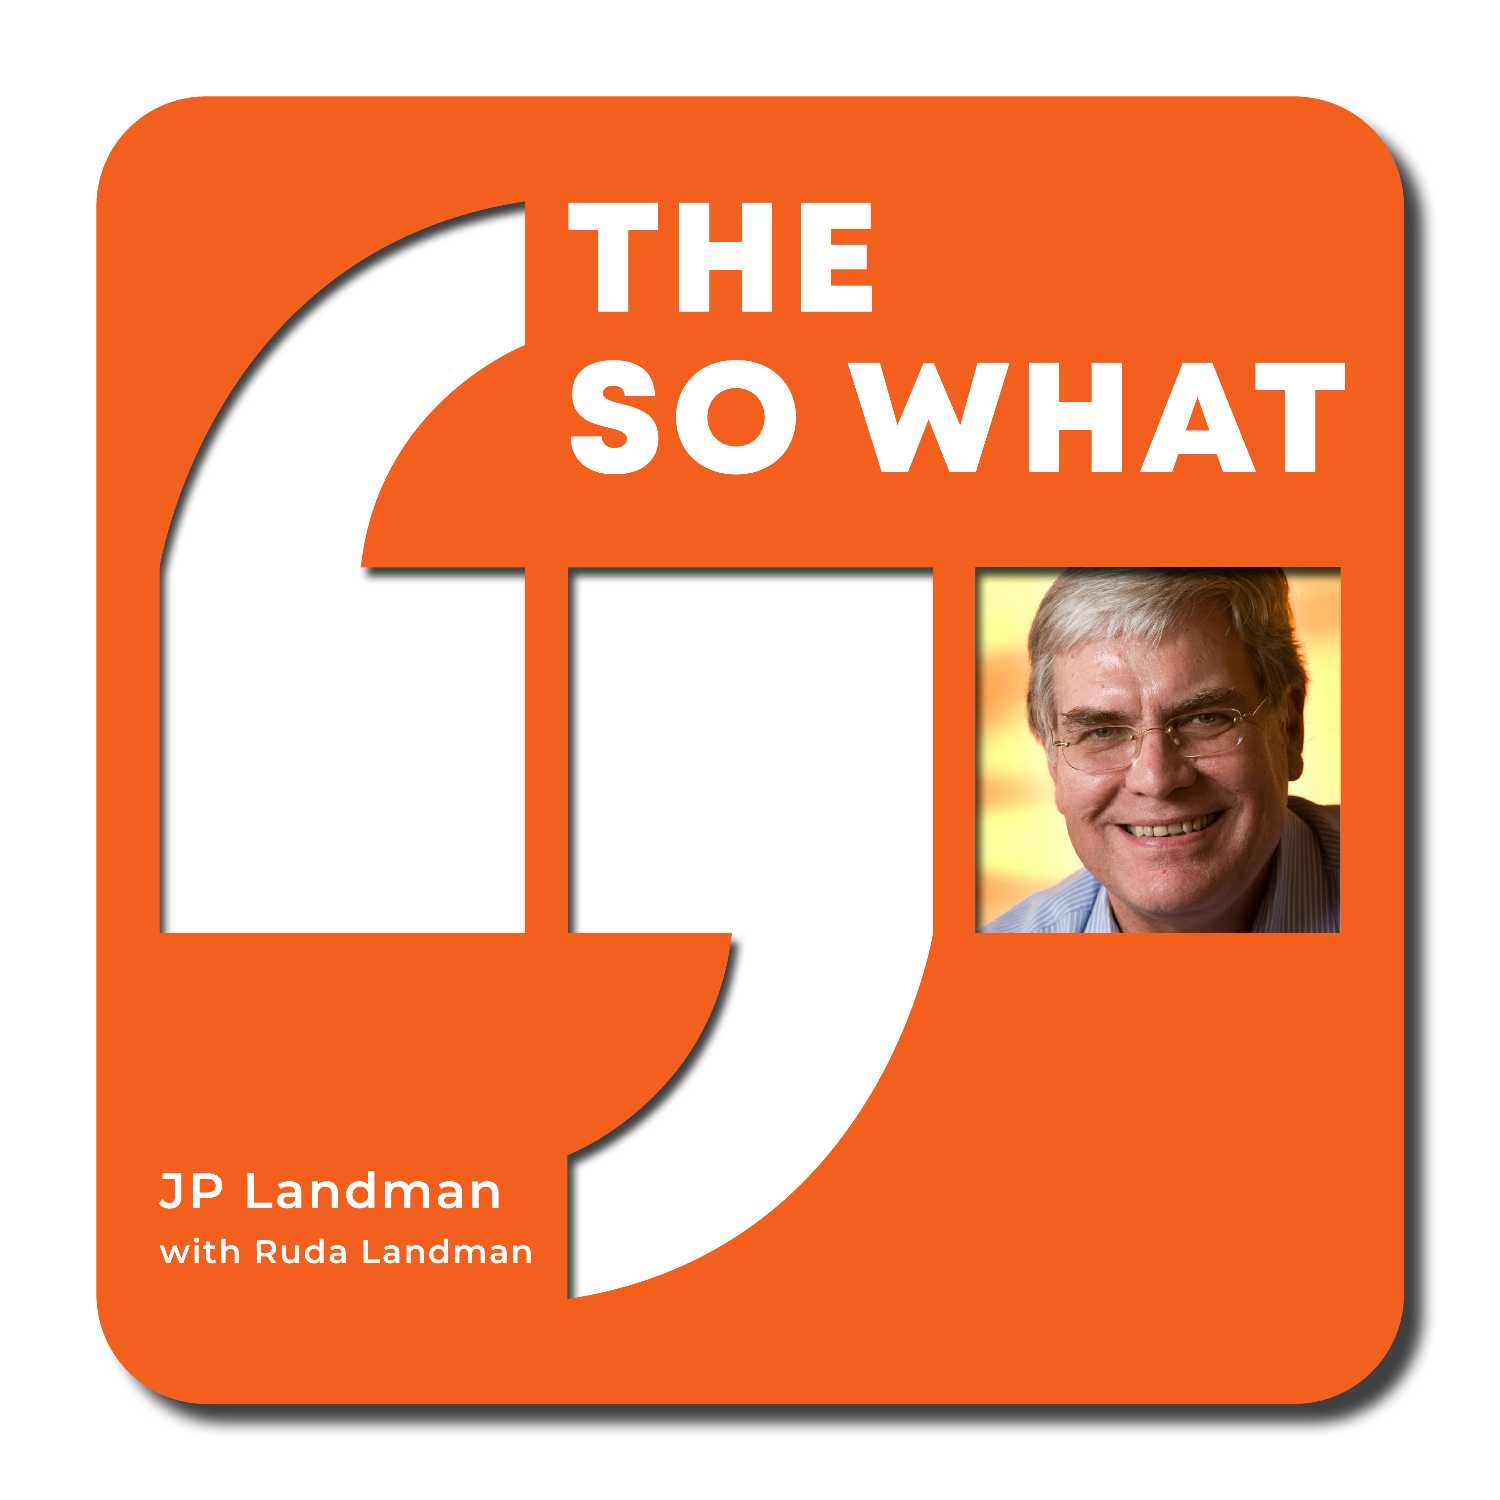 Introducing: The So What? With Ruda Landman and JP Landman